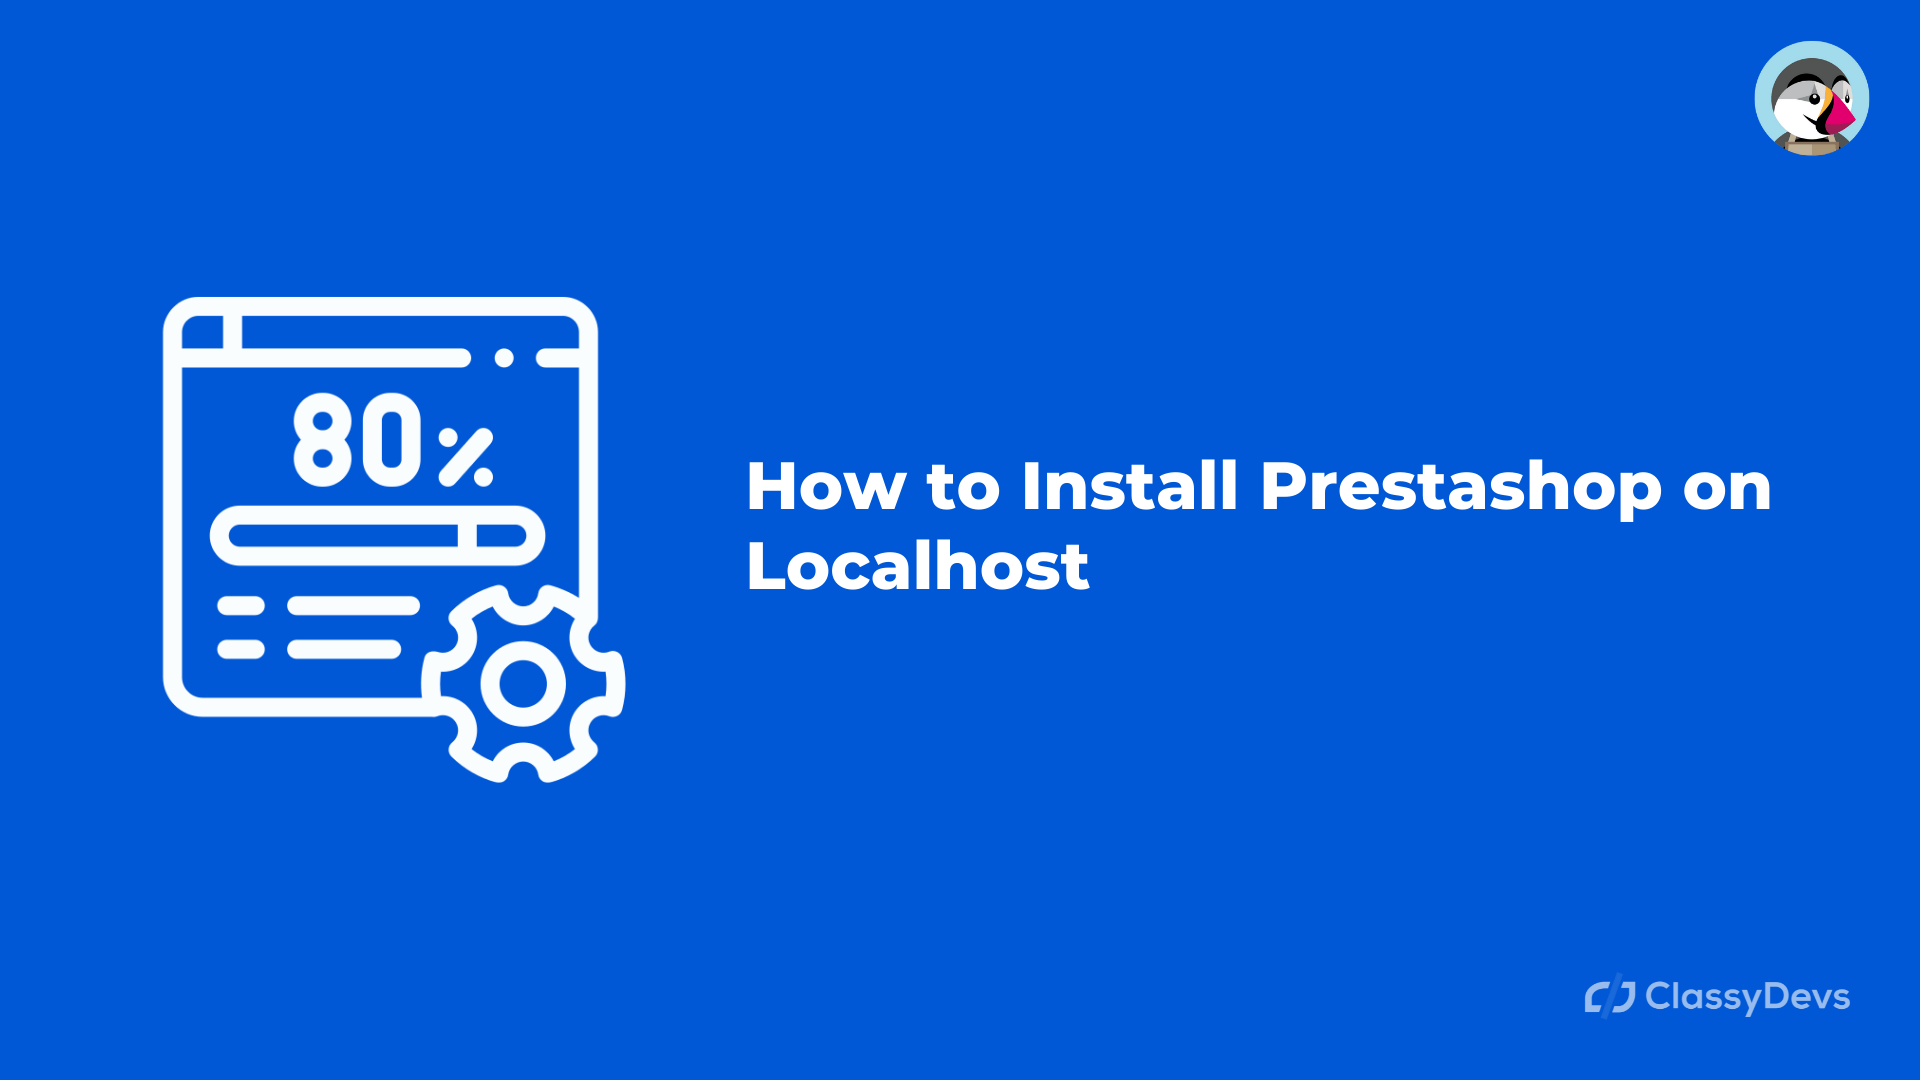 How to Install Prestashop on Localhost